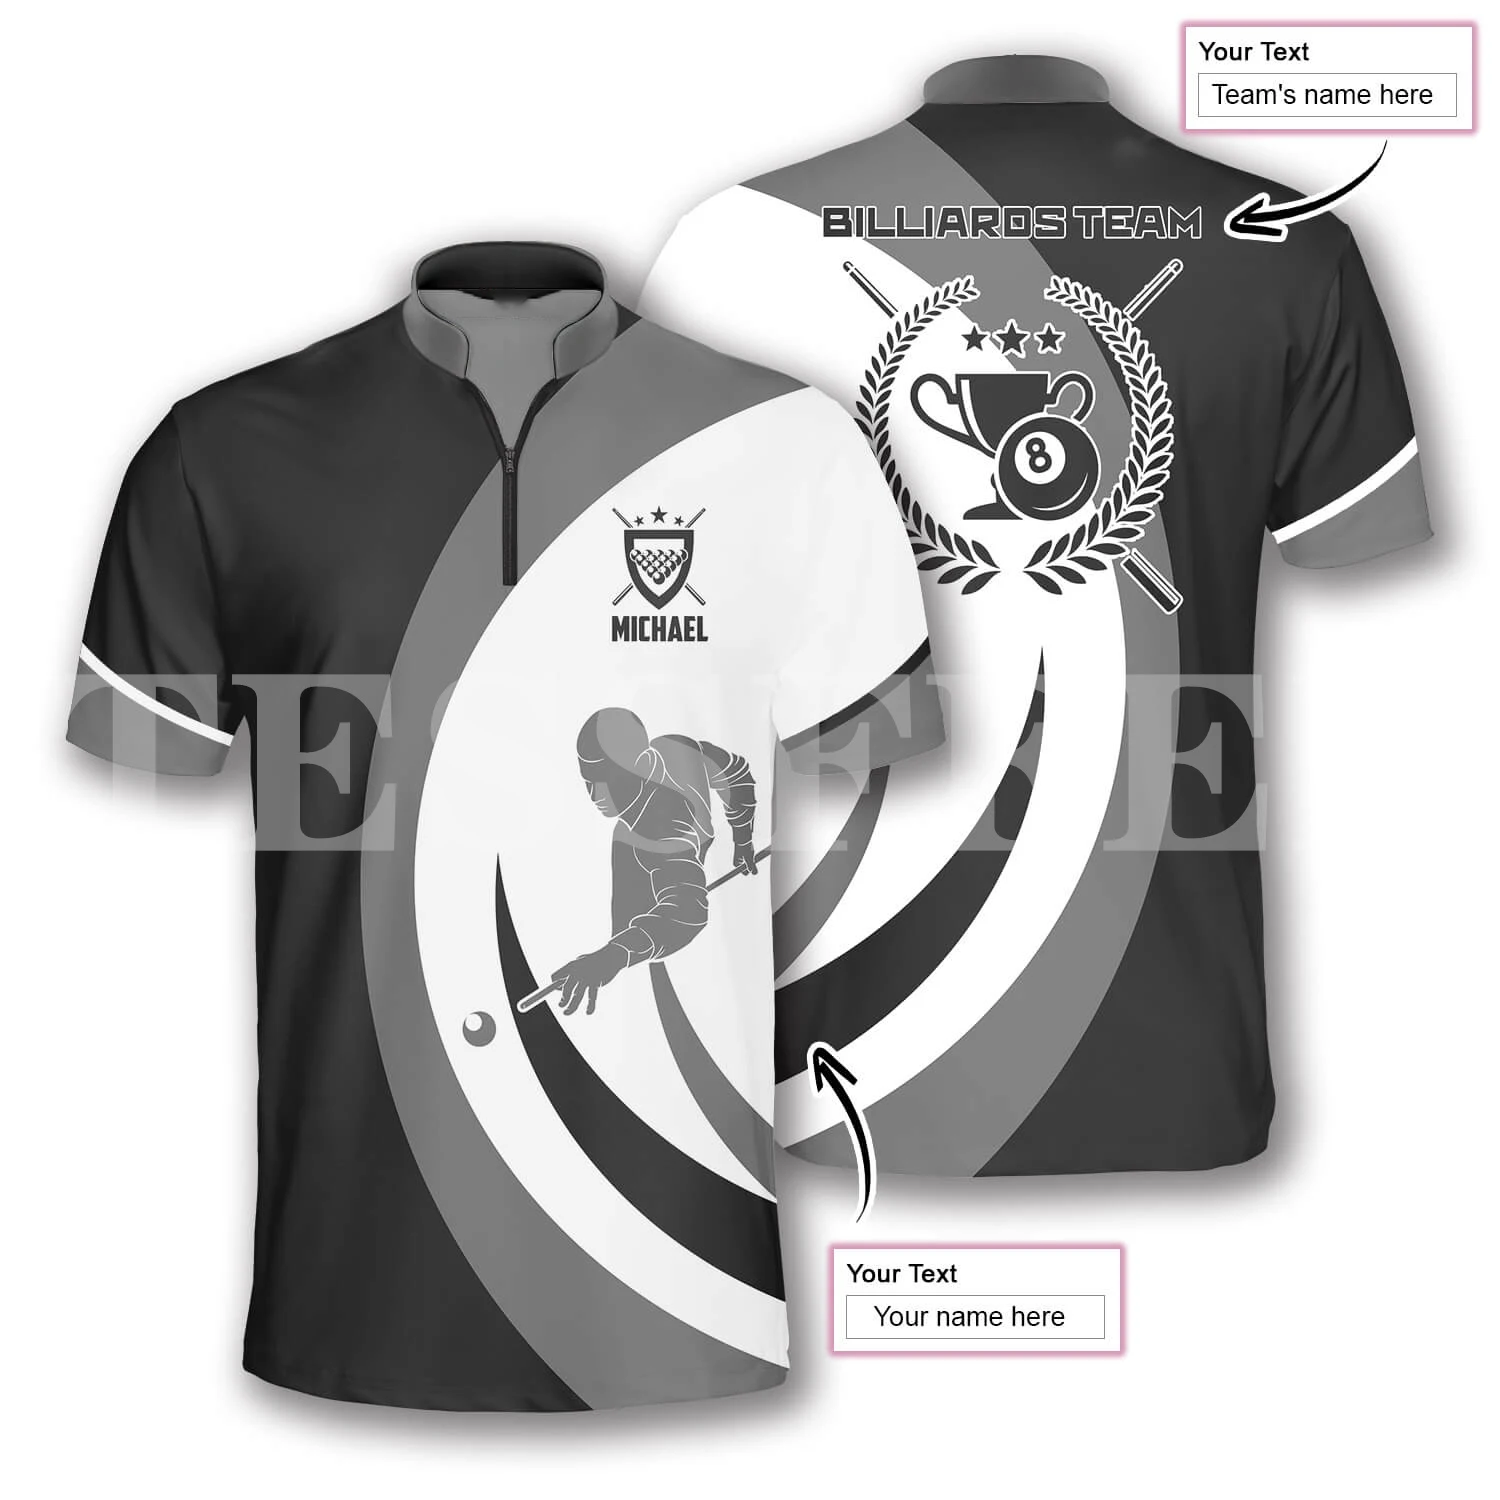 Aliexpress Predator Cues Logo 2 T-Shirt Vintage T Shirt Summer Clothes Funny T Shirts Slim Fit T Shirts for Men